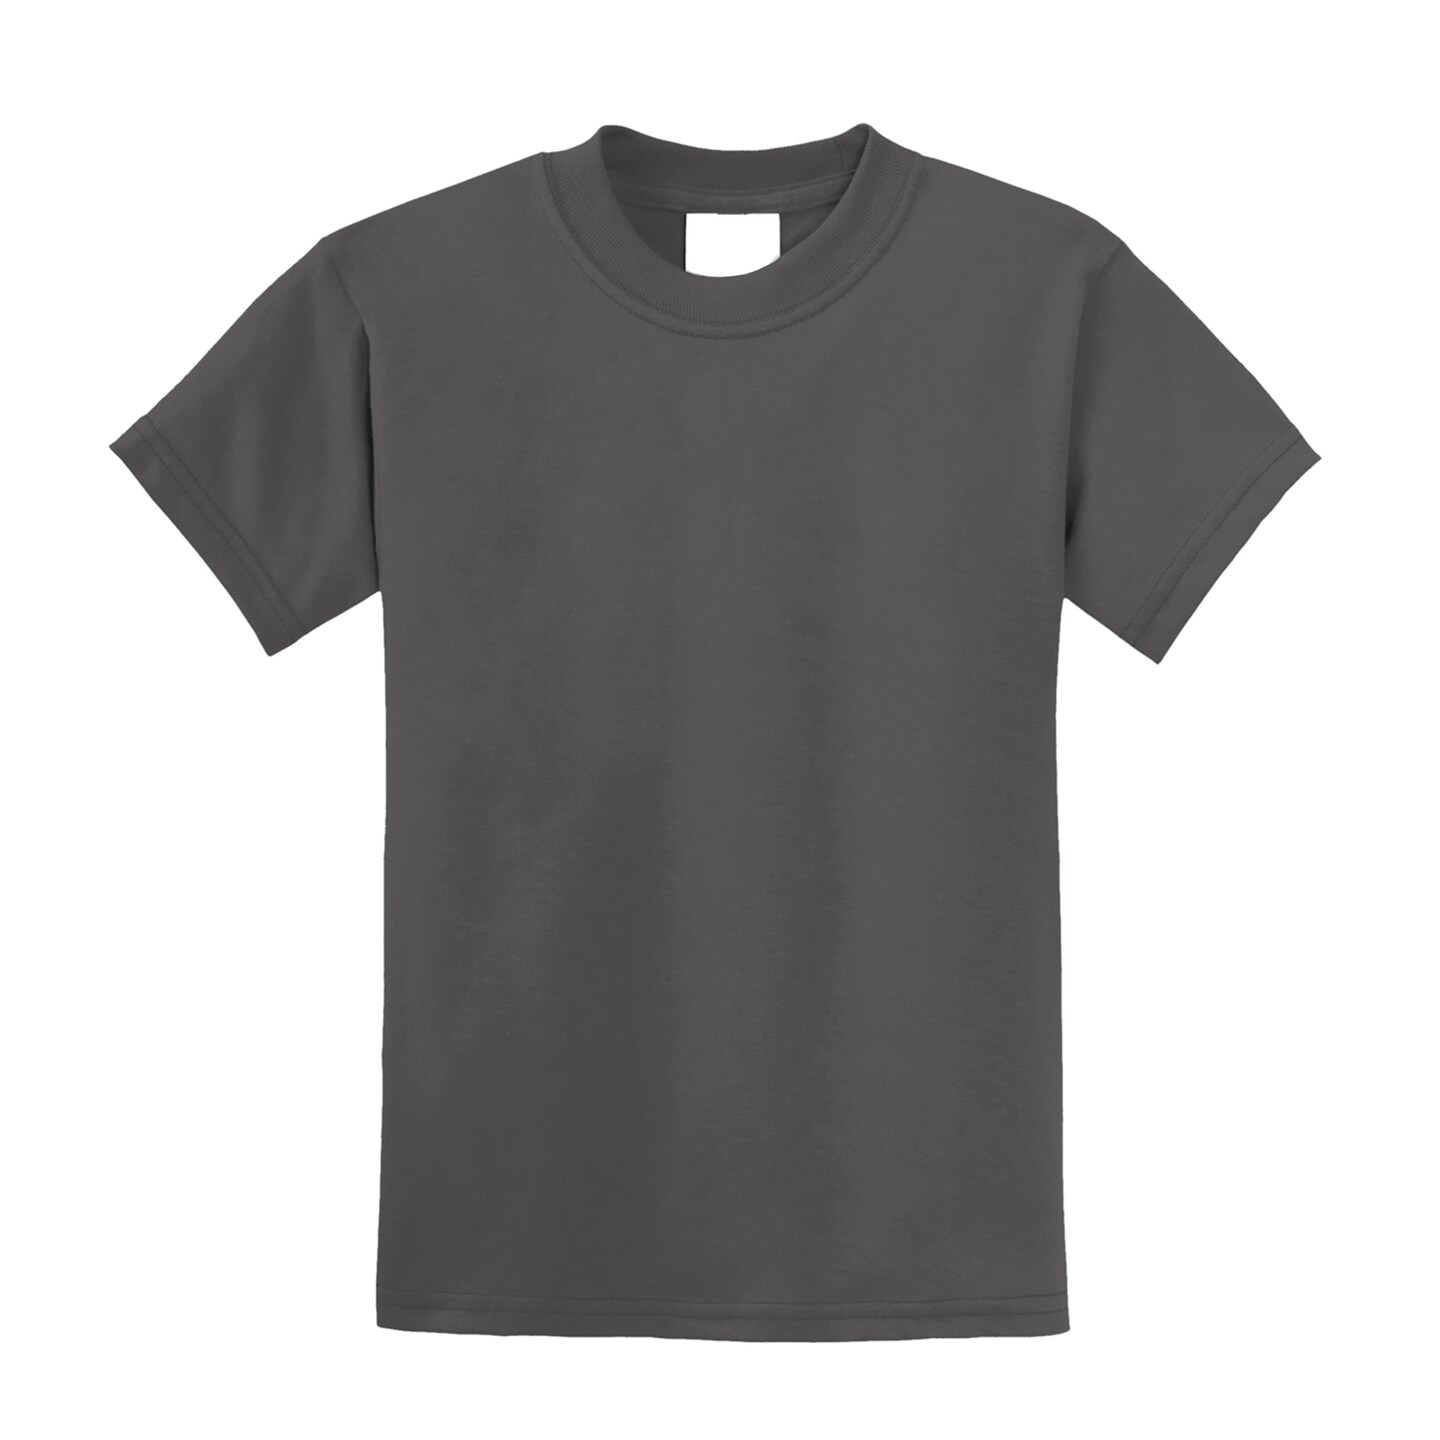 Everyday Elegance: Short-sleeve Kids T shirt Collection – Godlytatted